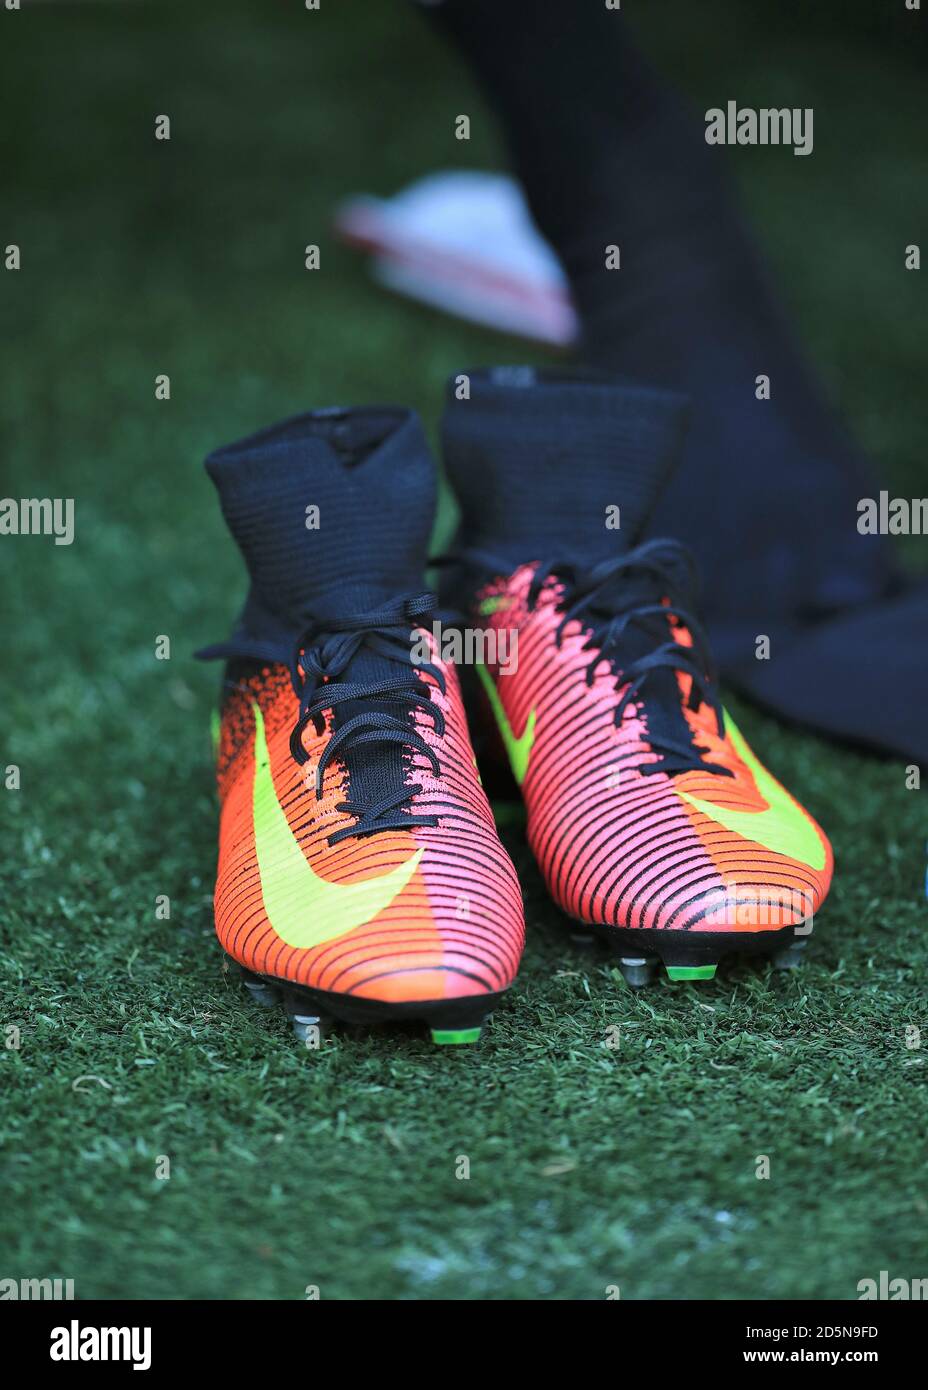 A of orange football boots Stock Photo -